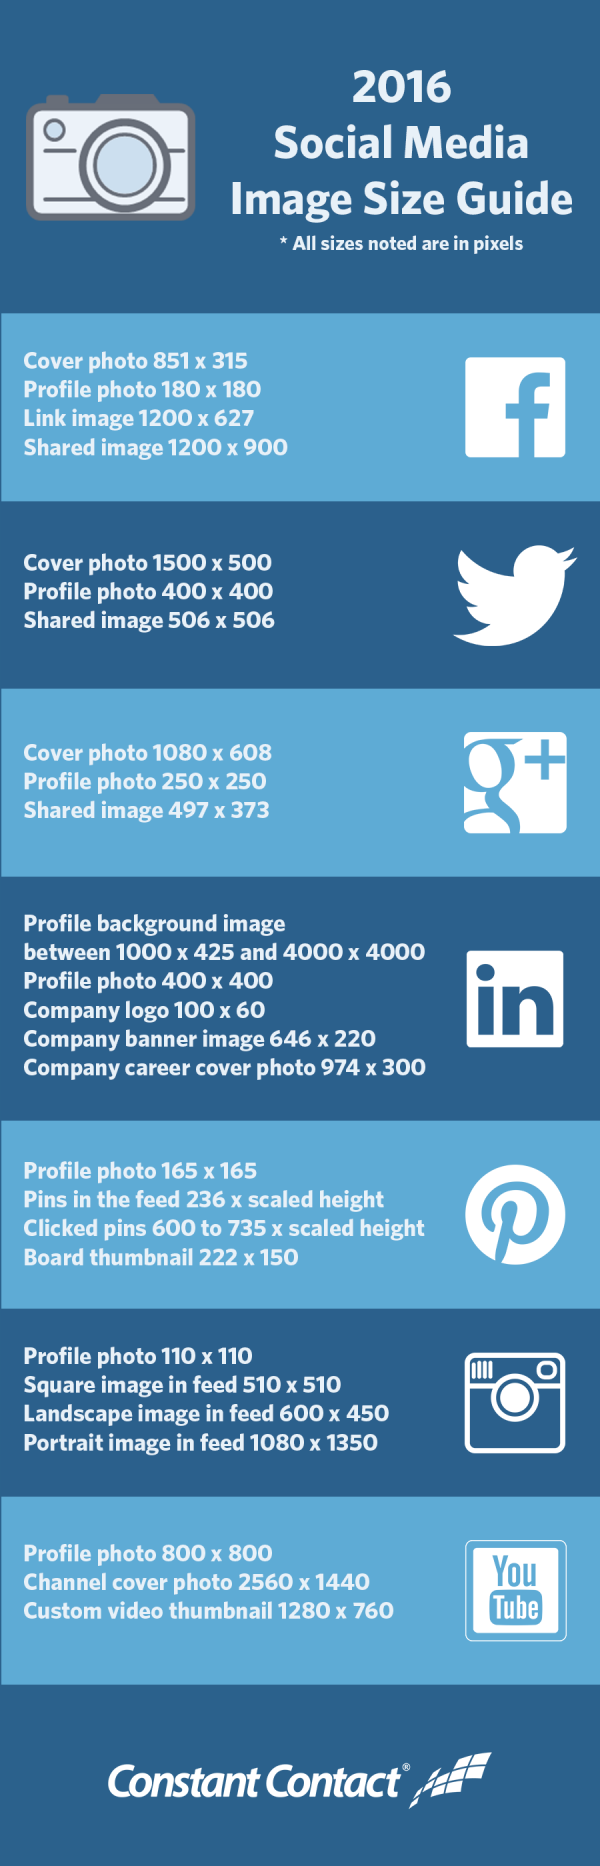 Social-Media-Image-Size-Guide